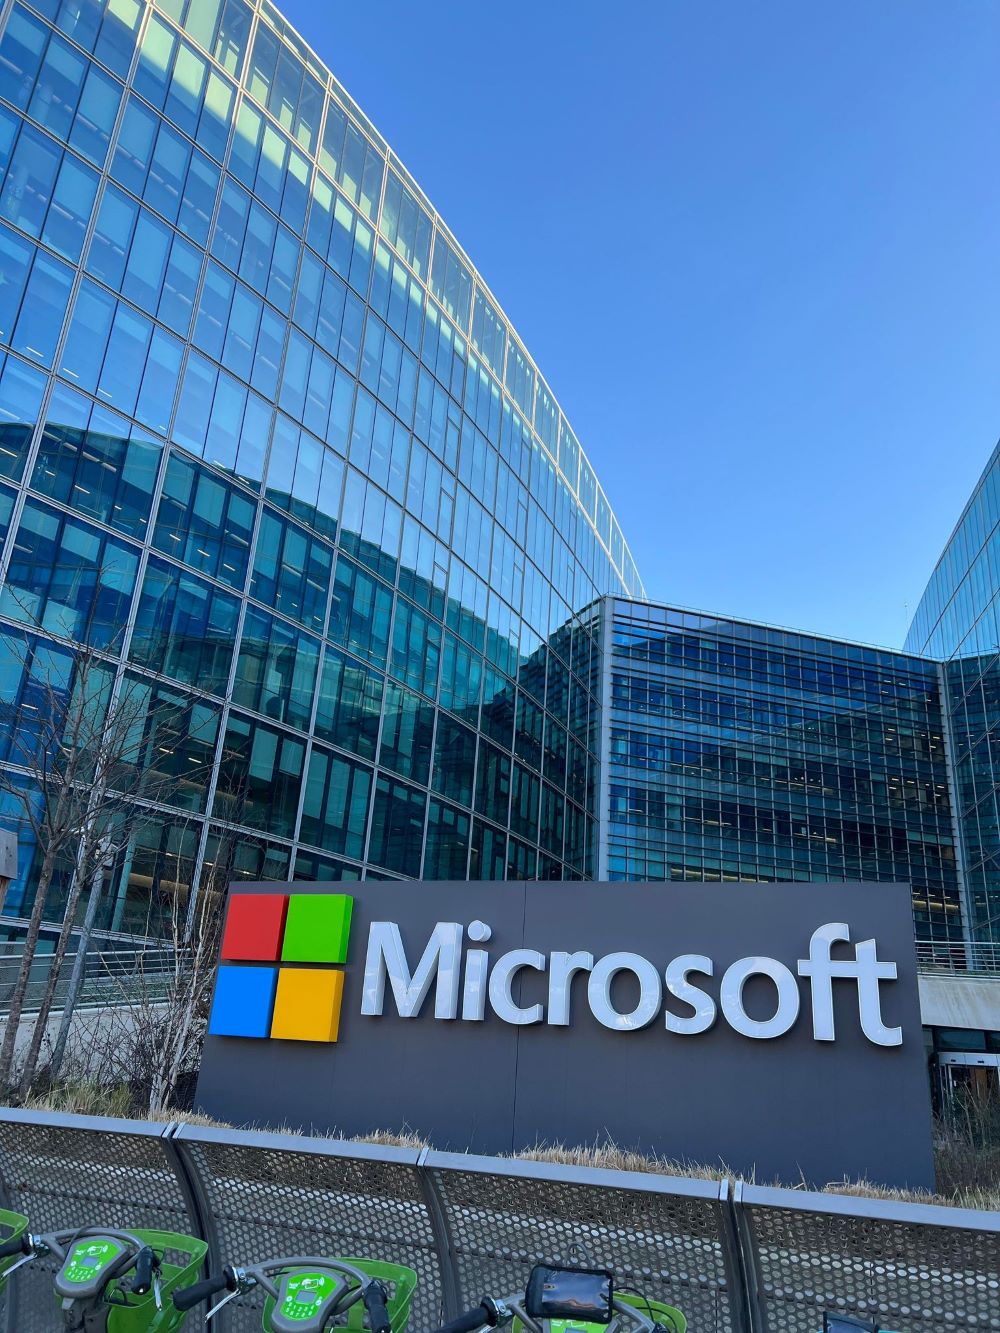 Microsoft headquarters in France